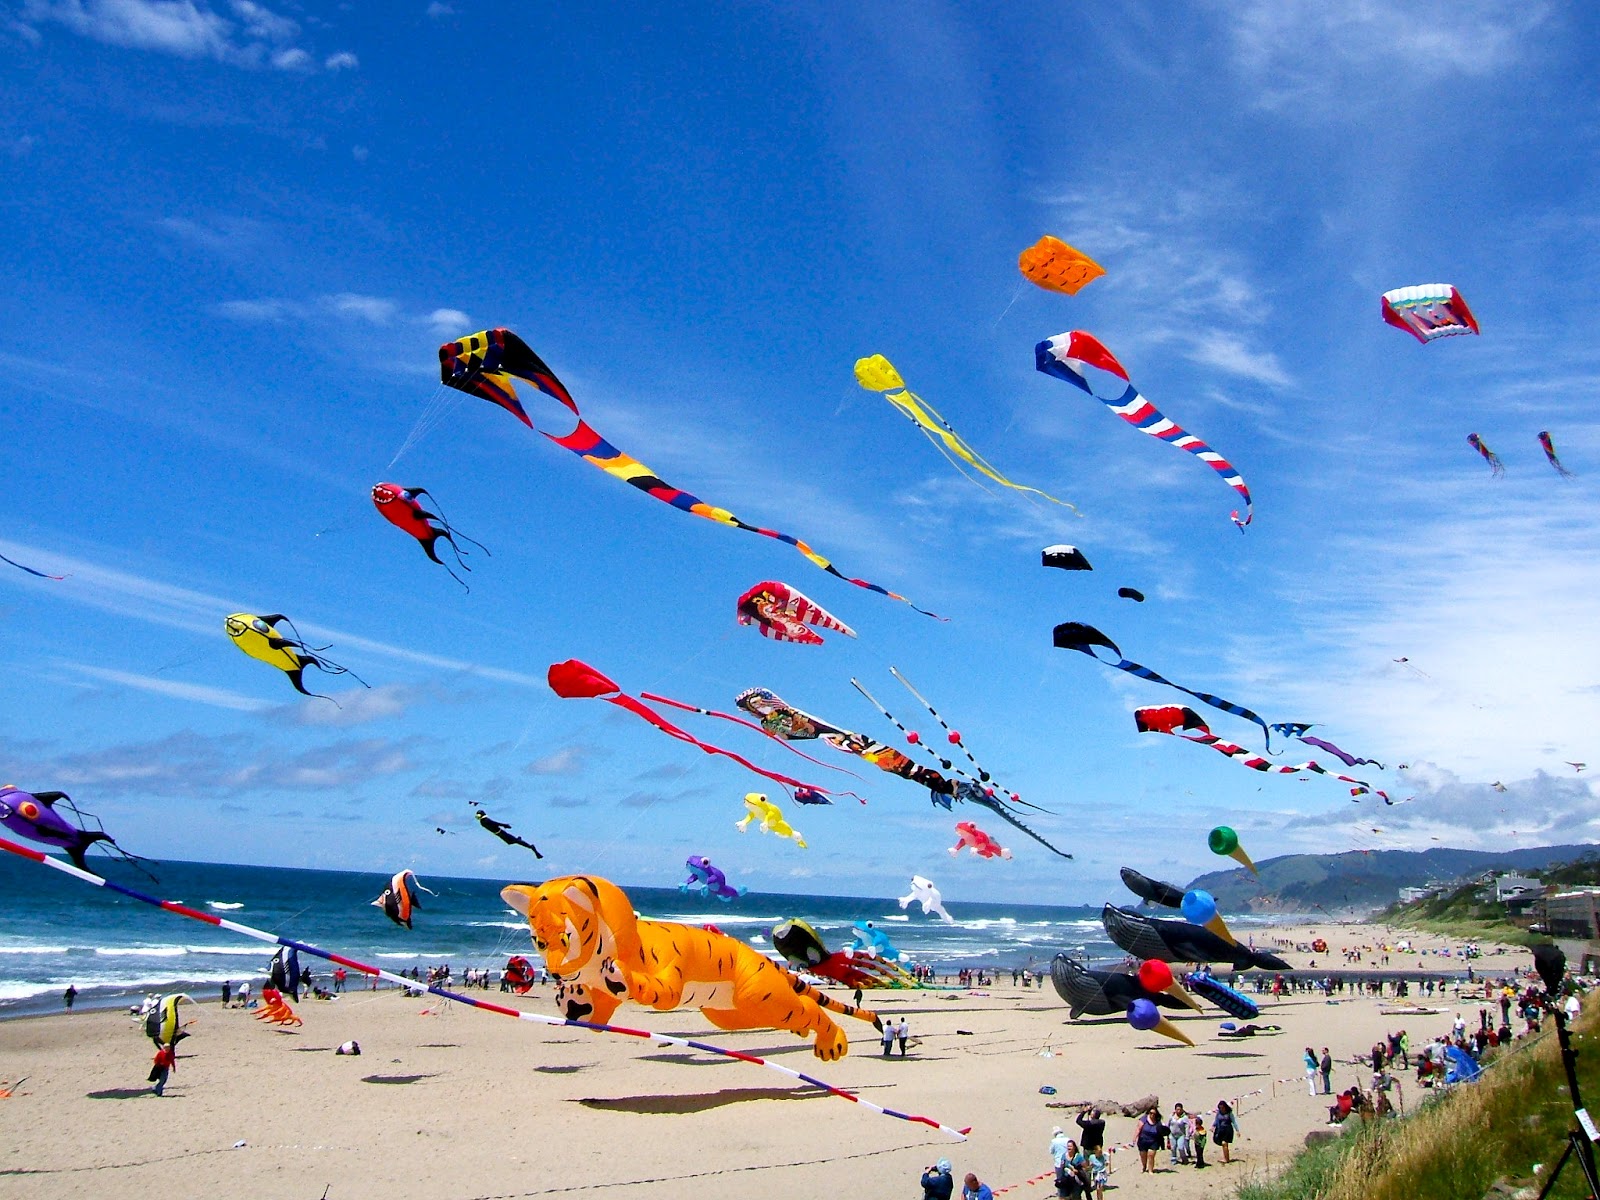 Kite flying delight for children at festival - North Cyprus Online ...